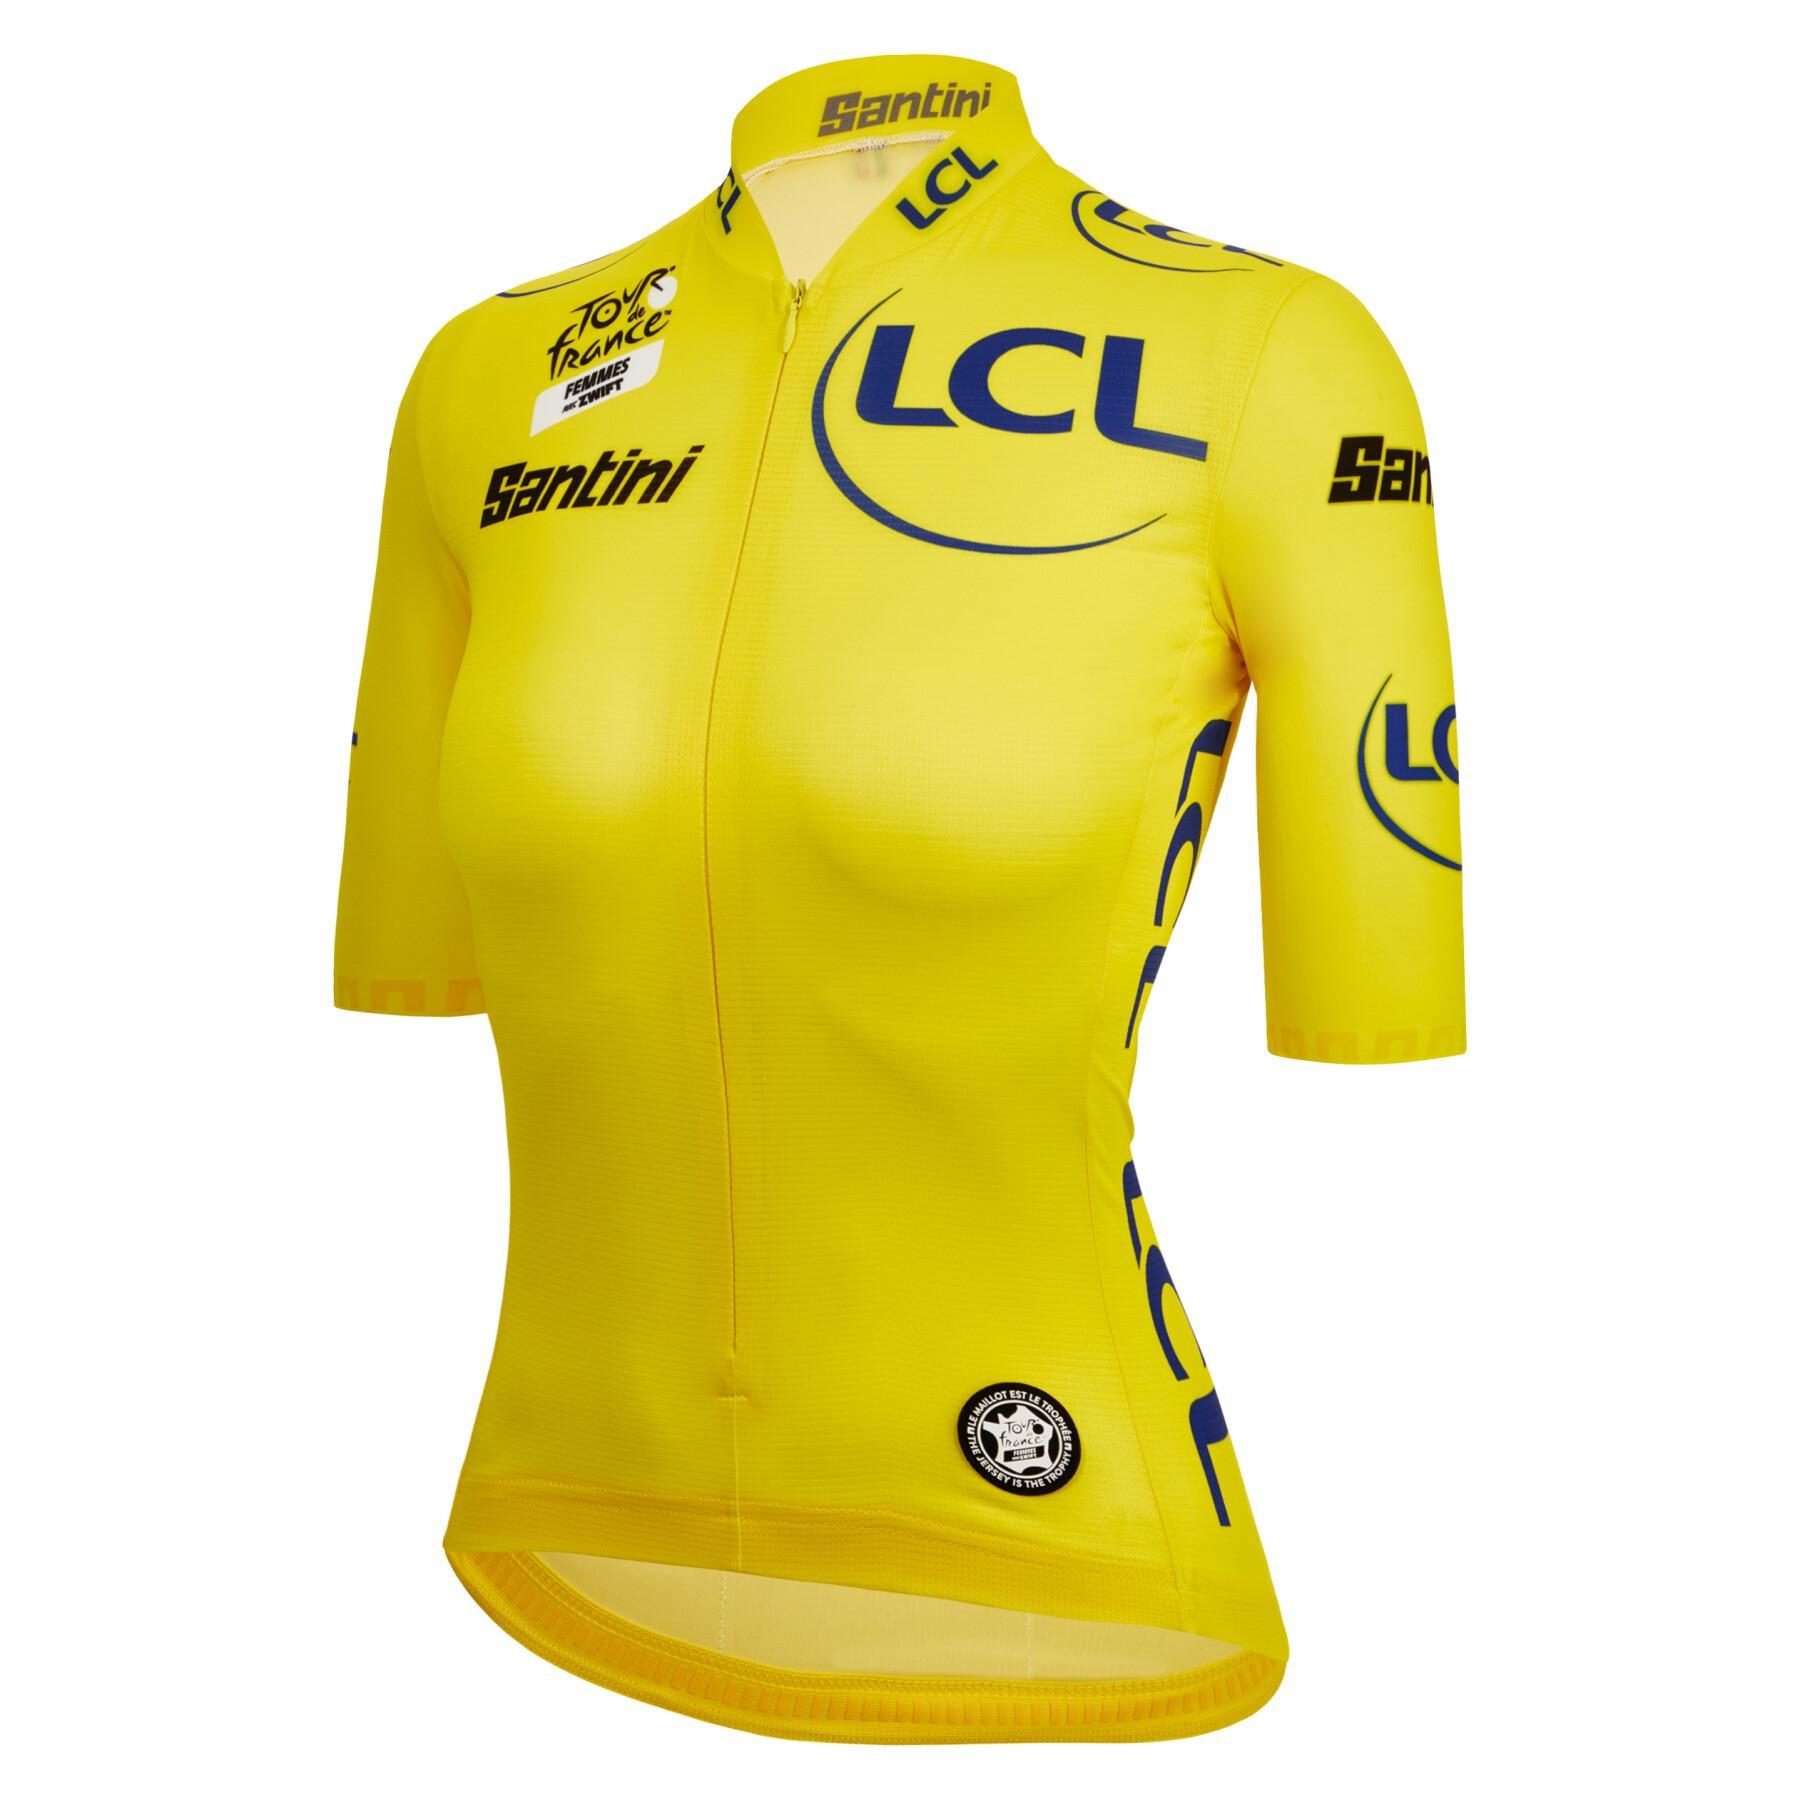 Koszulka lidera klasyfikacji generalnej kobiet Santini Tour de France